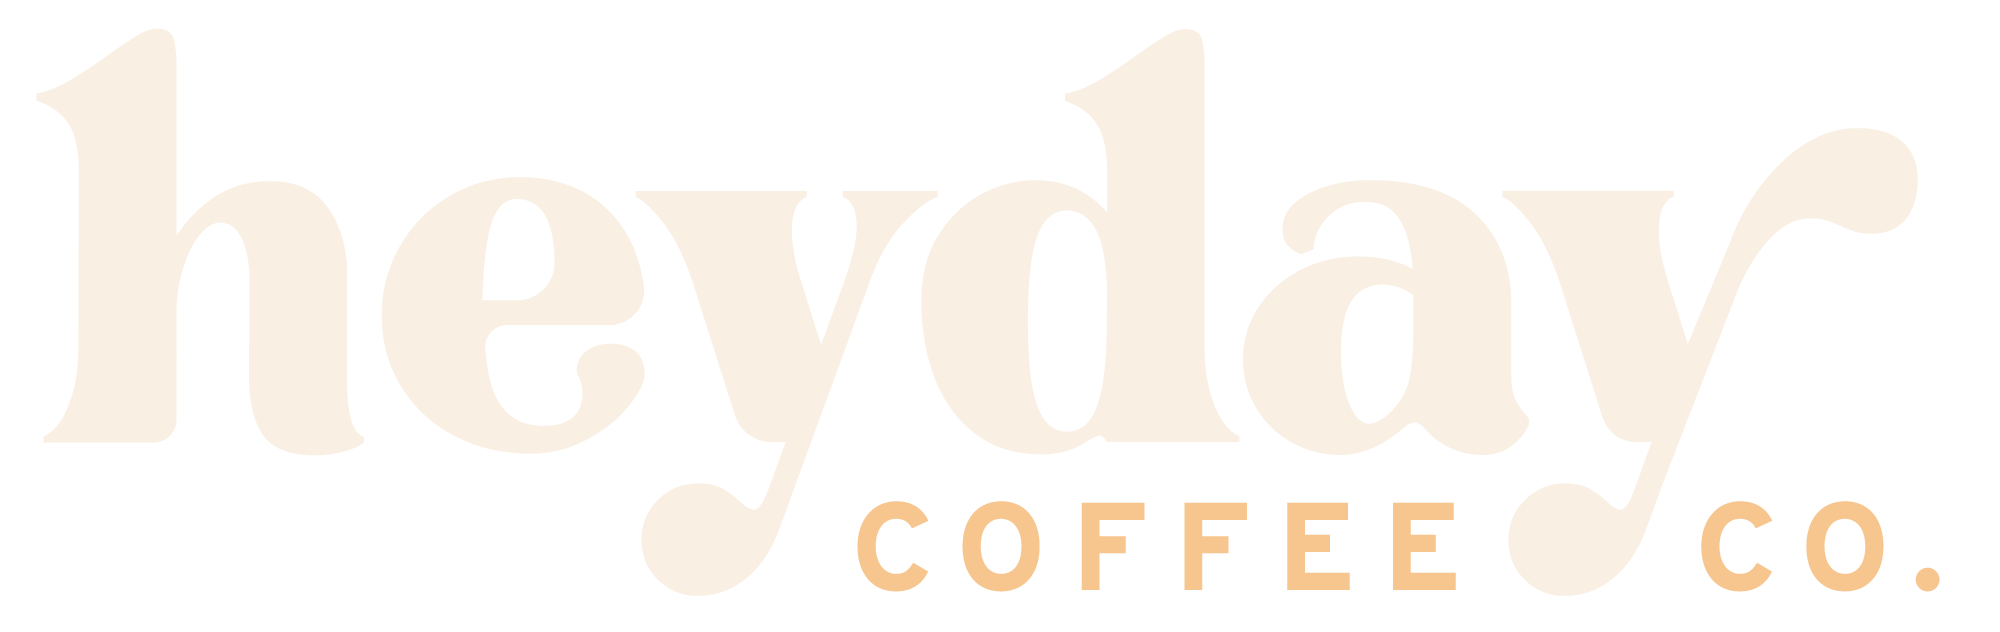 horizontally oriented Heyday Coffee Co logo.